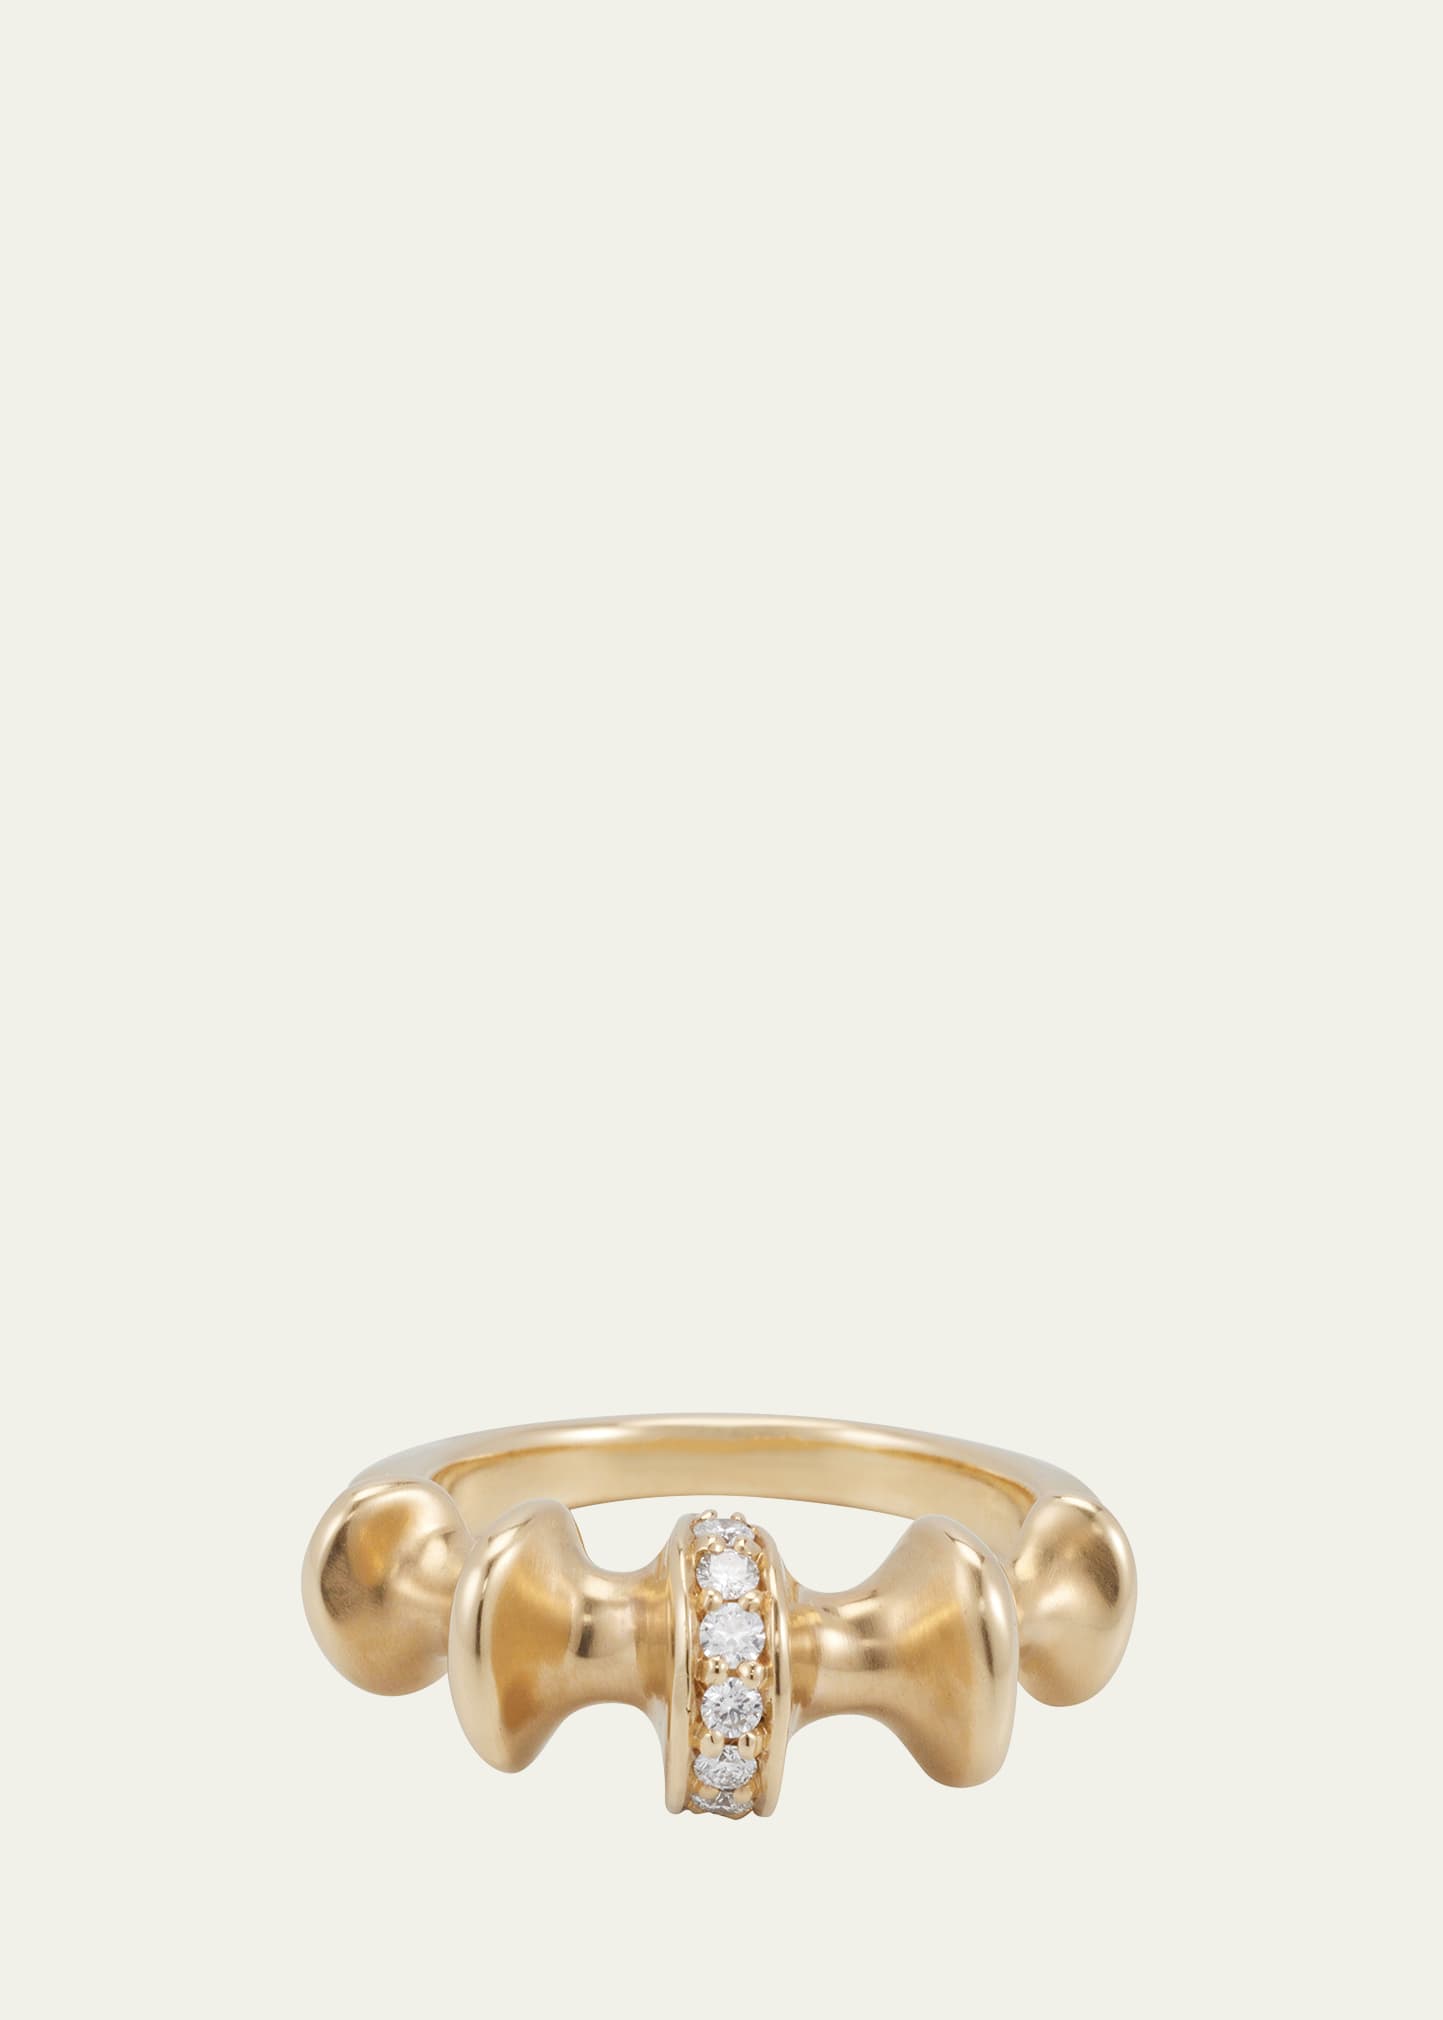 18k Yellow Gold Chrona Band Ring With Diamonds, Size 6.5